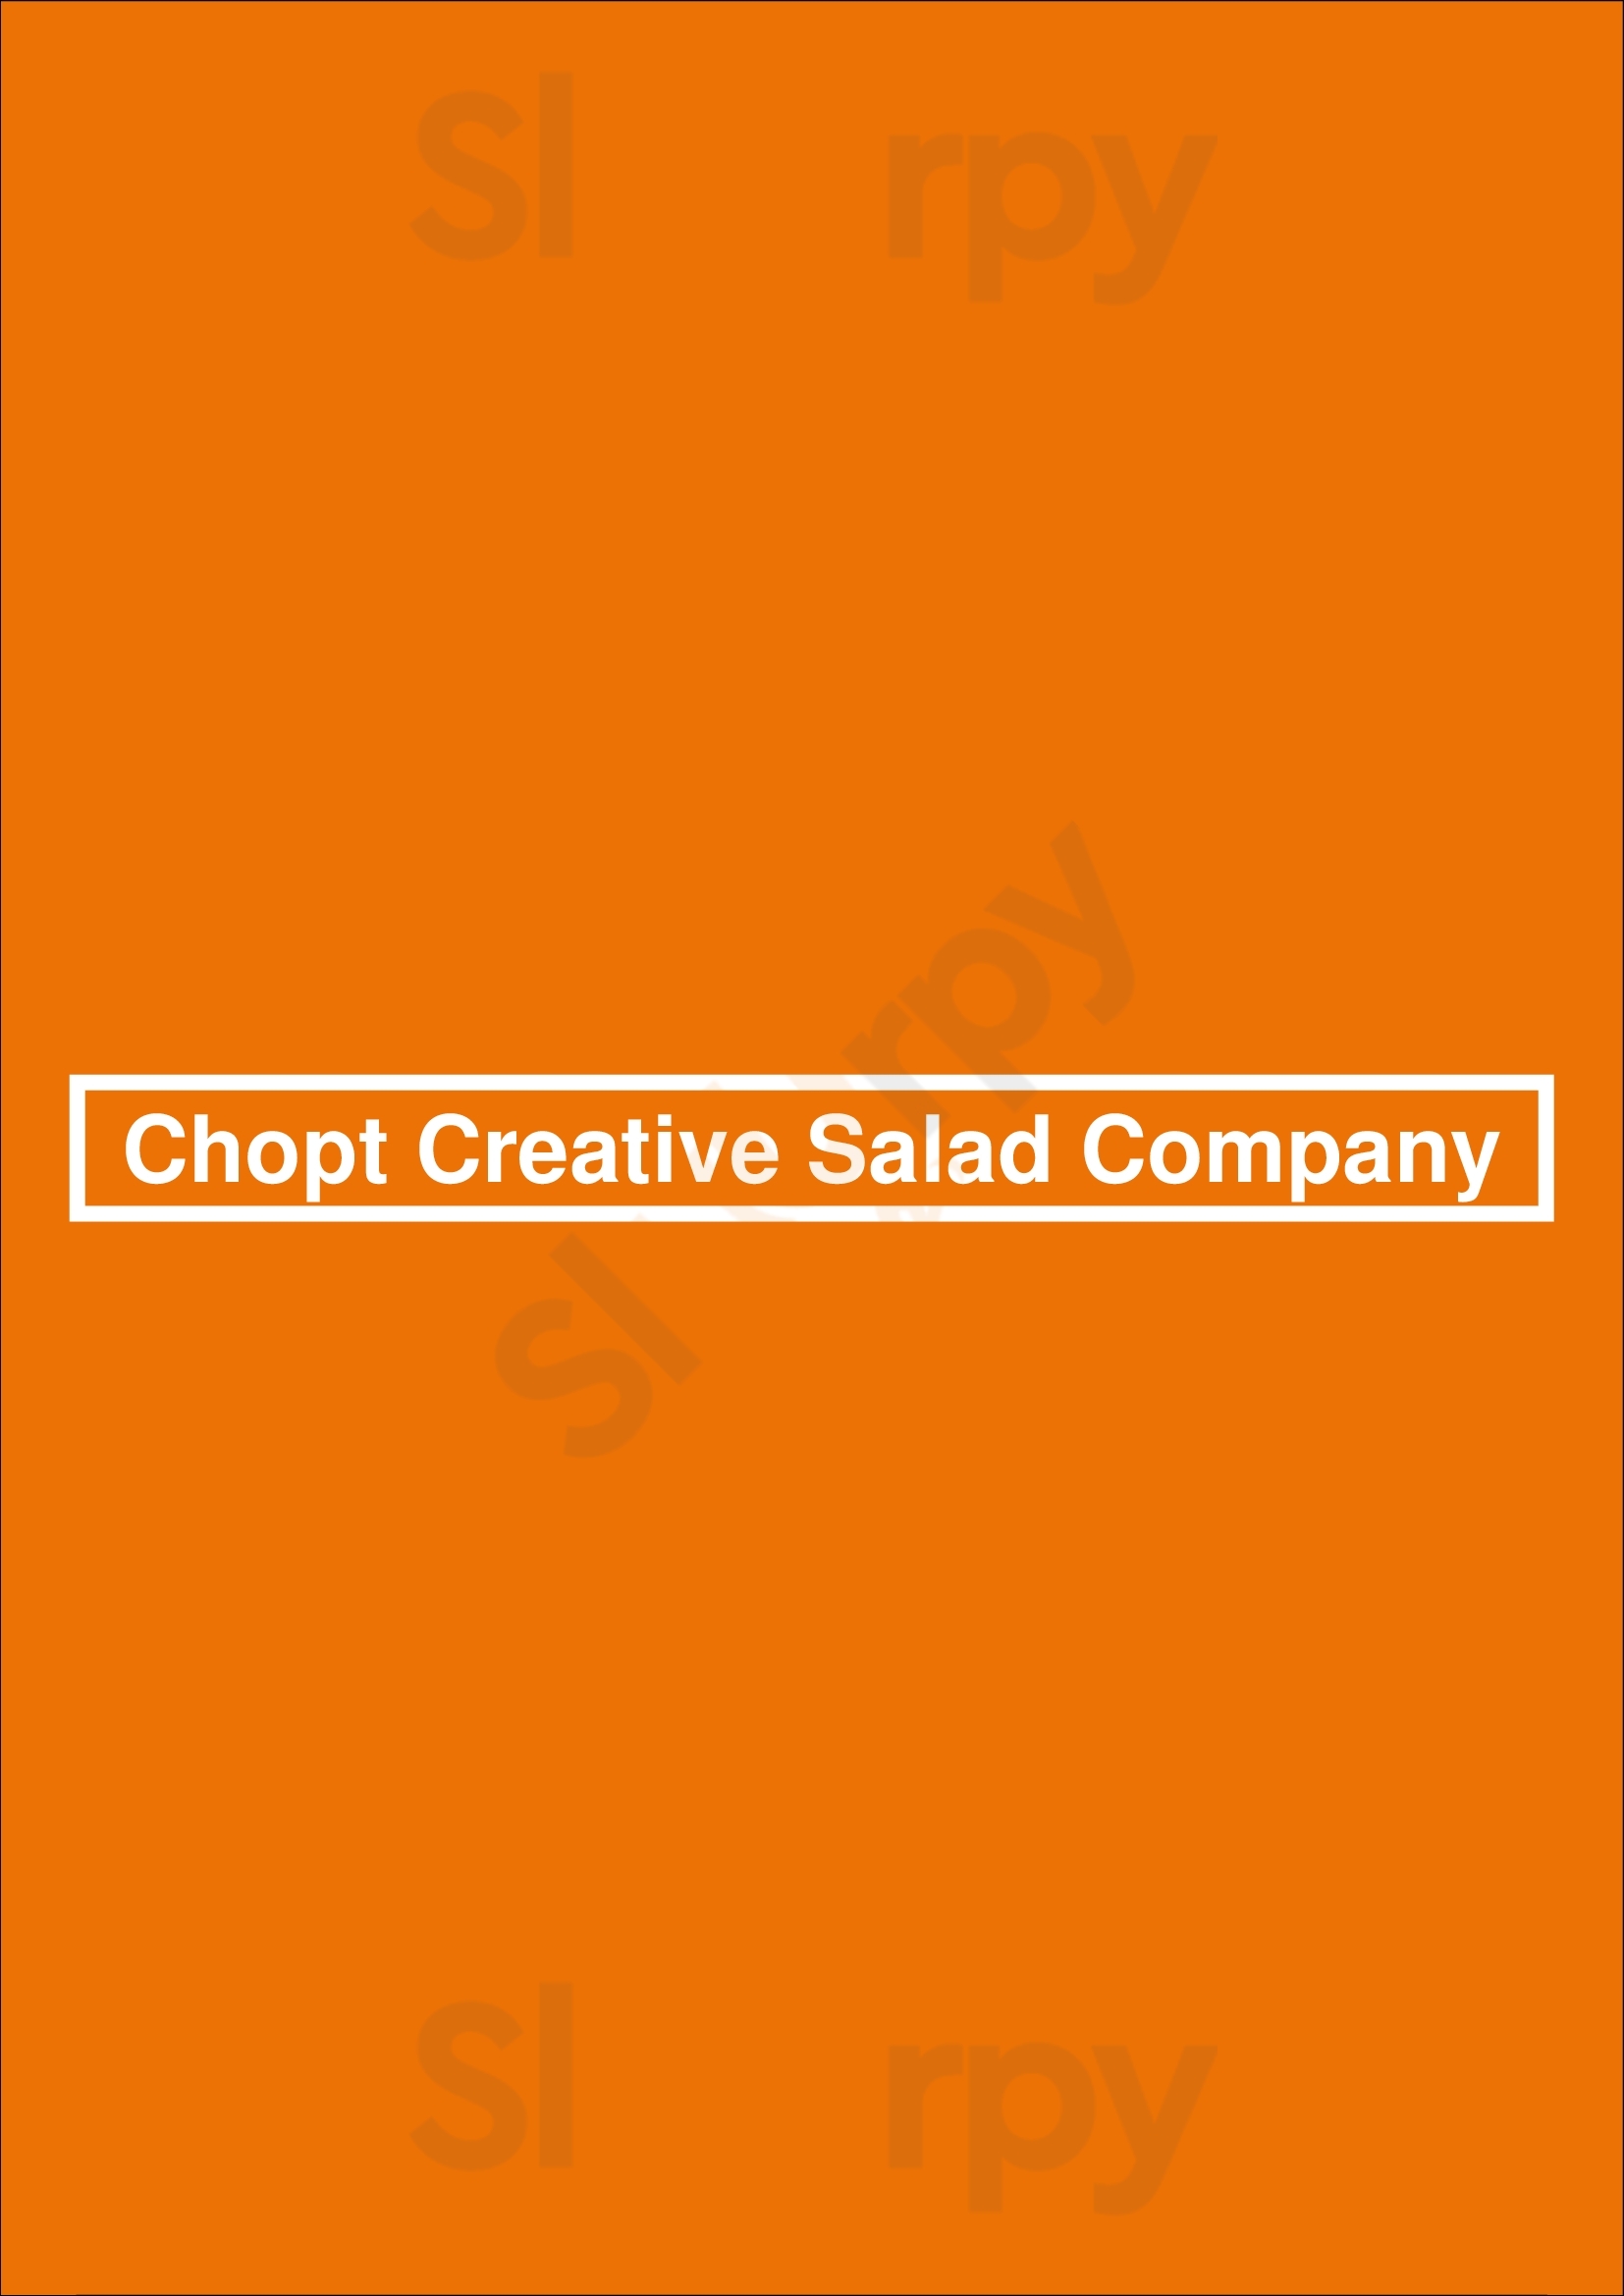 Chopt Creative Salad Company Washington DC Menu - 1